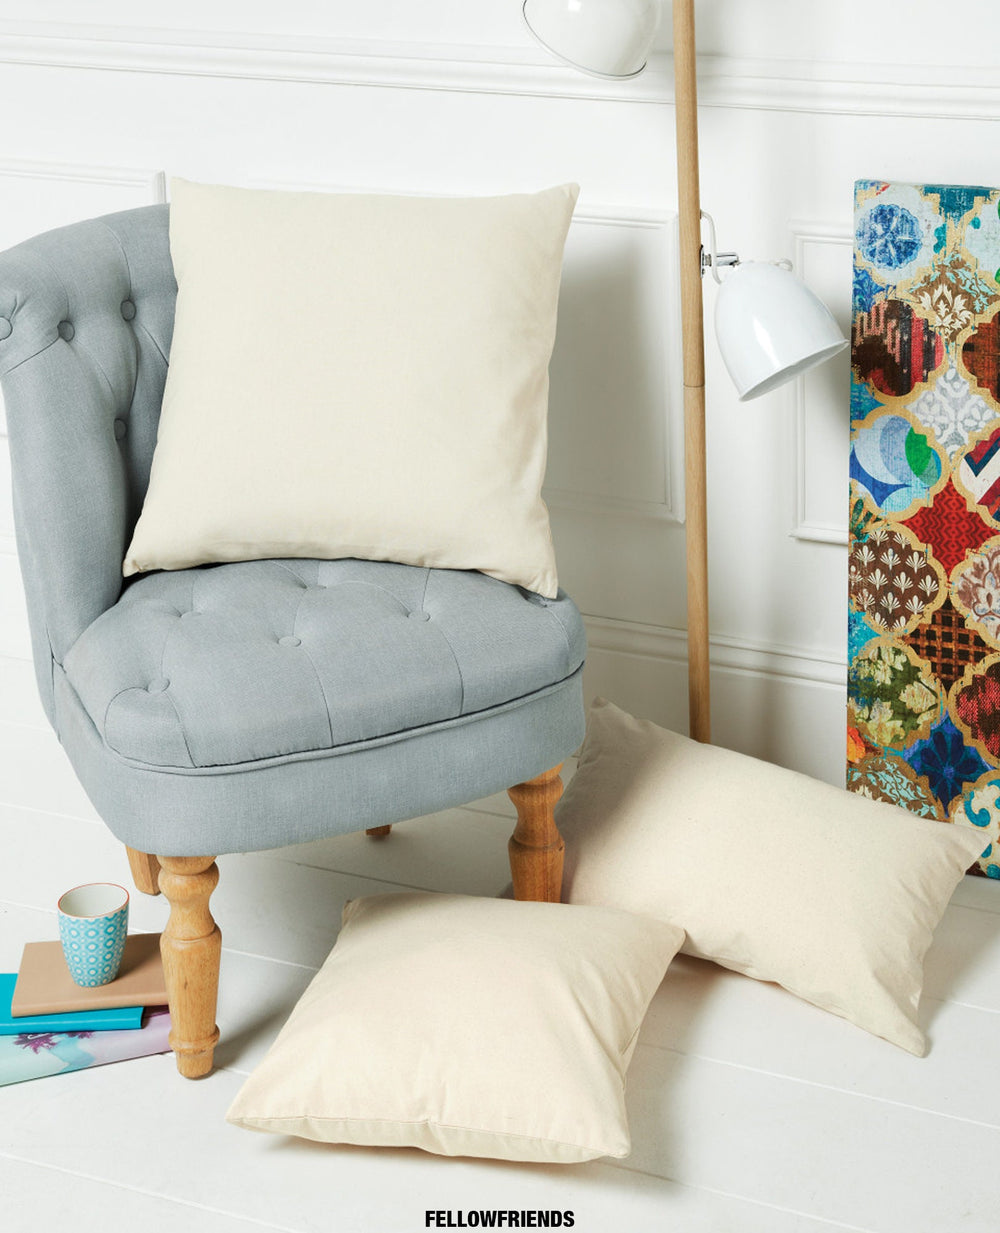 Doberman cushion, dog pillow, doberman pillow, cover cotton canvas print, dog lover gift for her 40 x 40 50 x 50 177